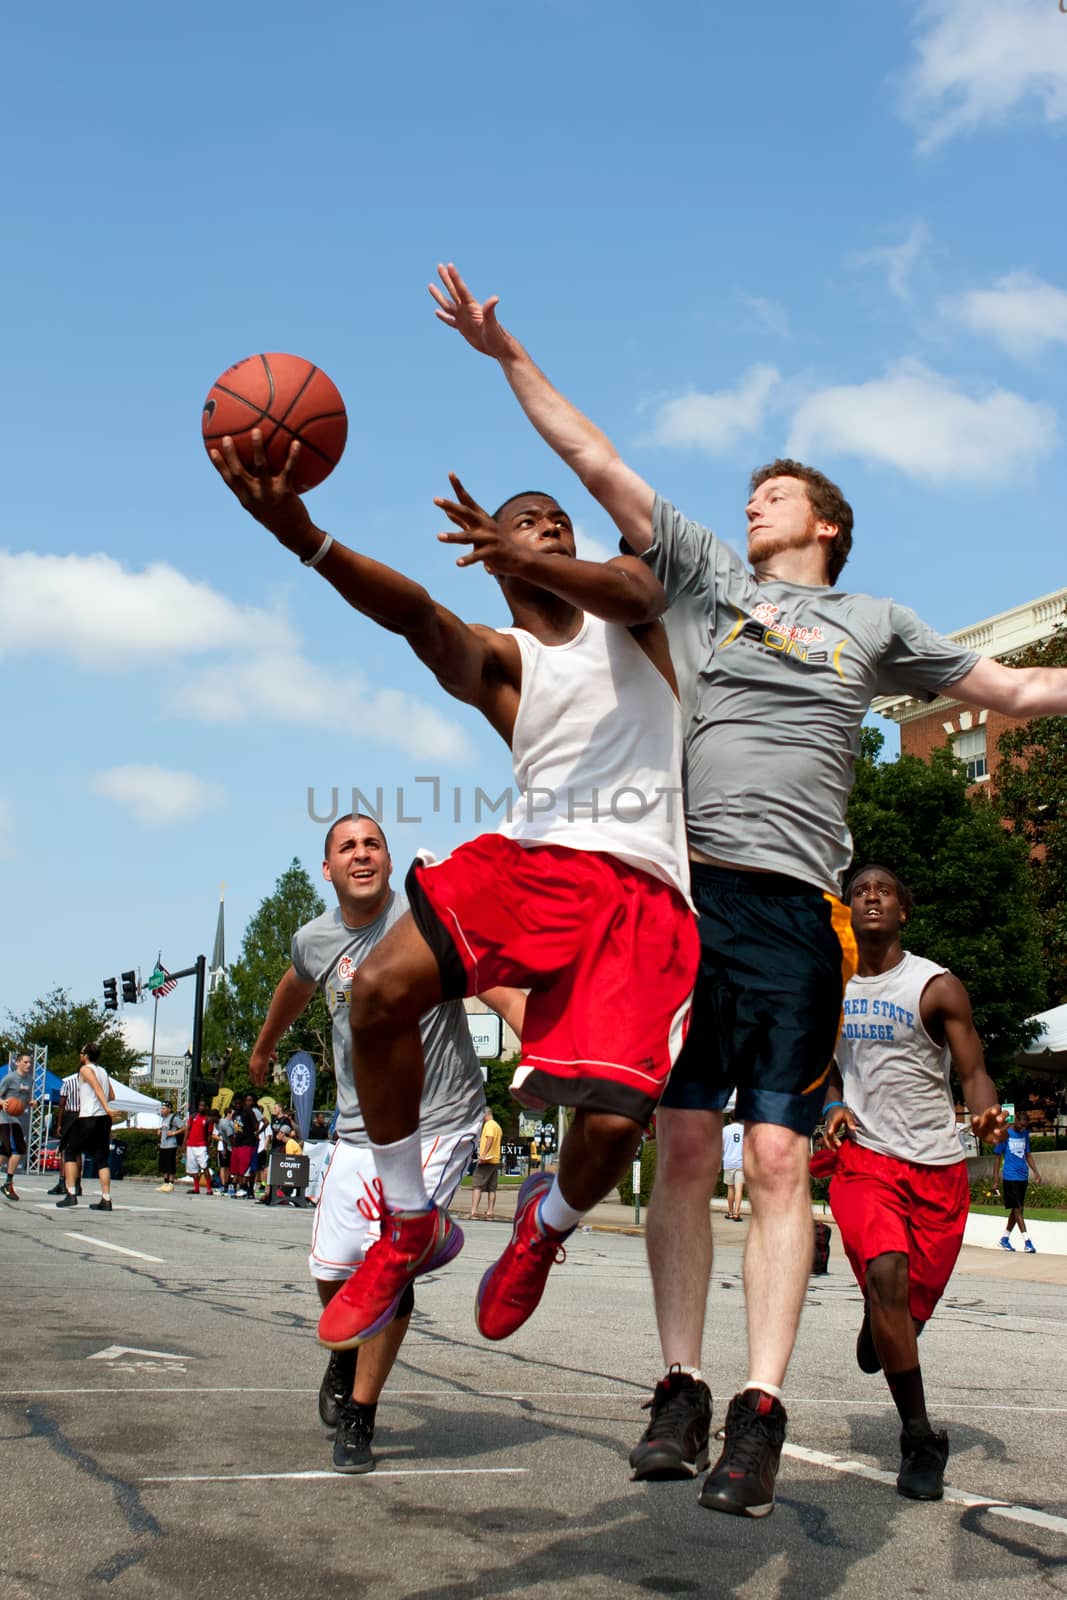 Man Shoots Against Defender In Outdoor Street Basketball Tournament by BluIz60